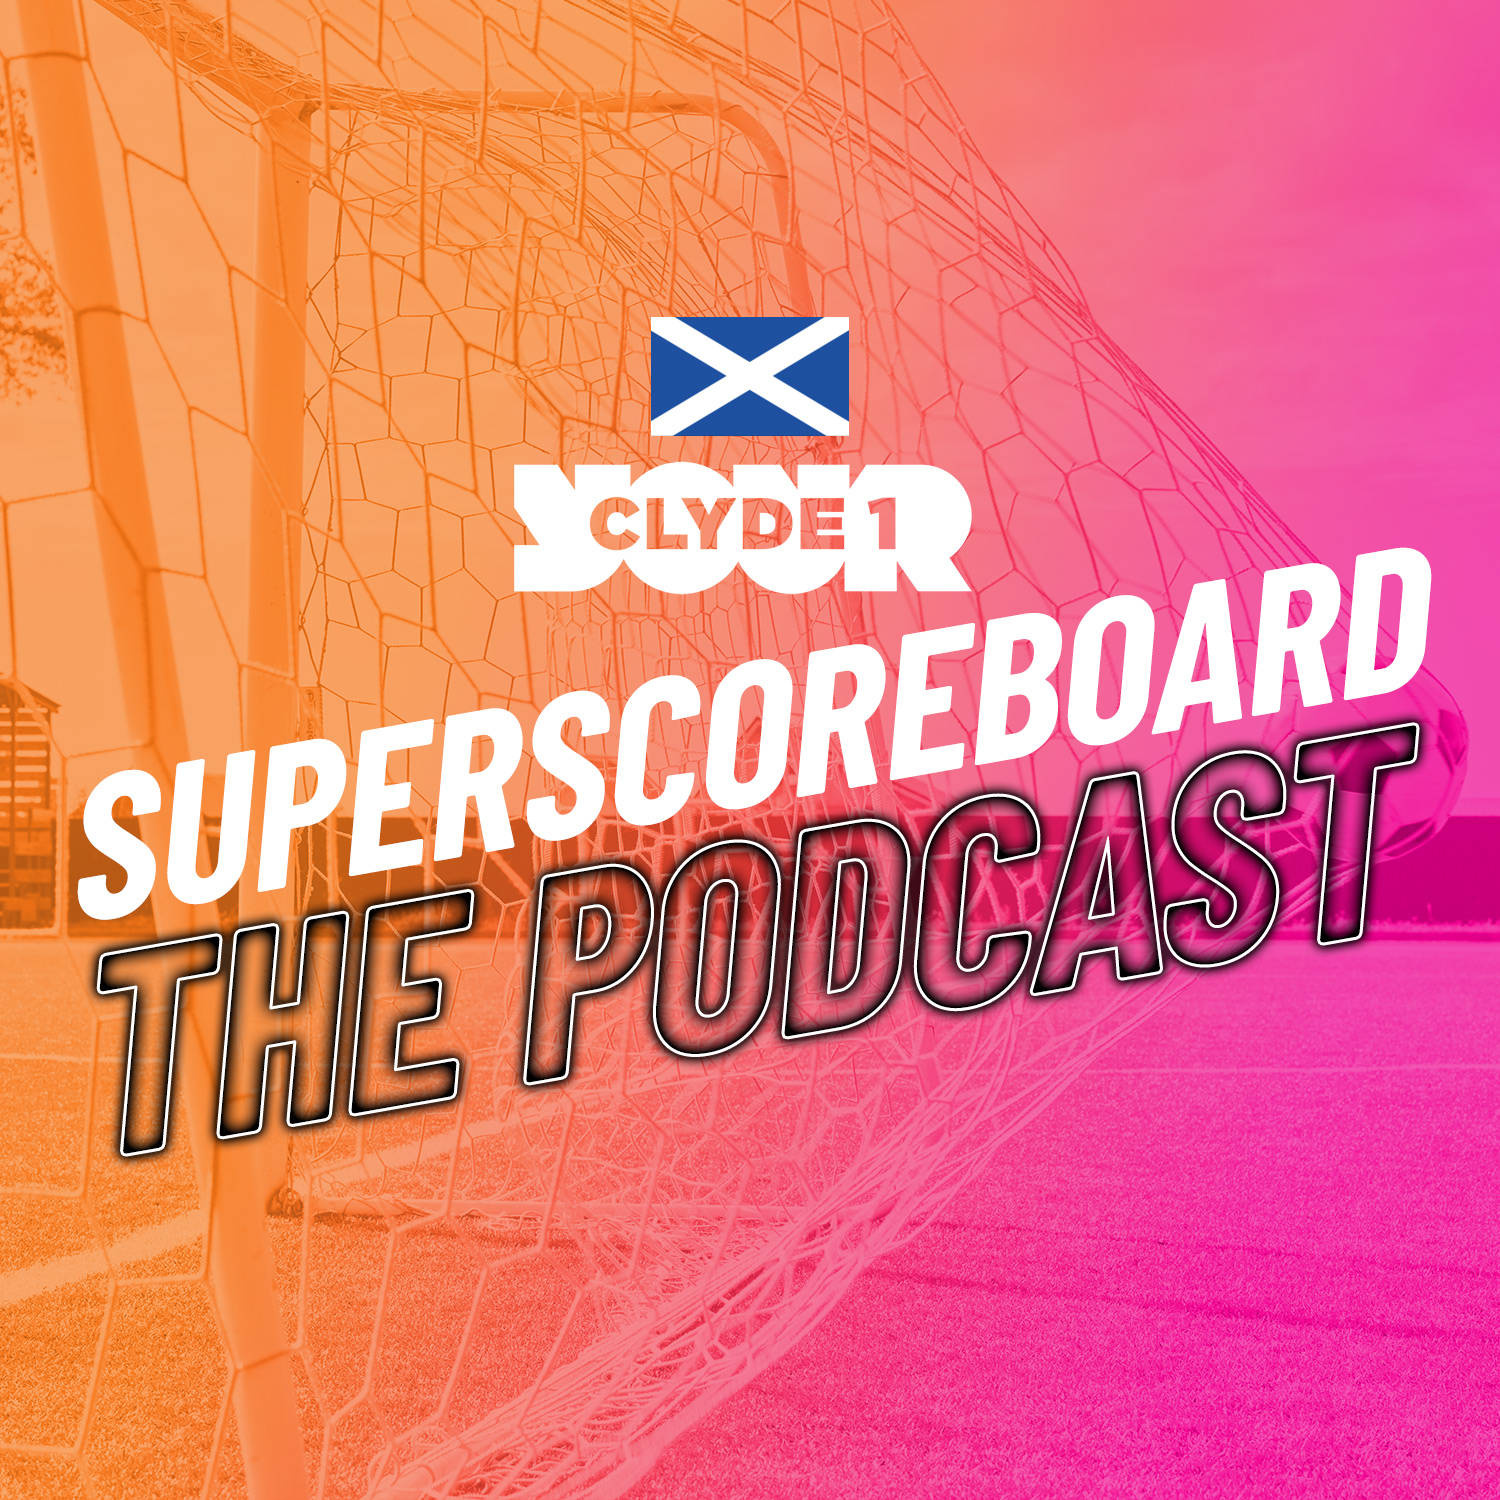 Thursday 28th March Clyde 1 Superscoreboard